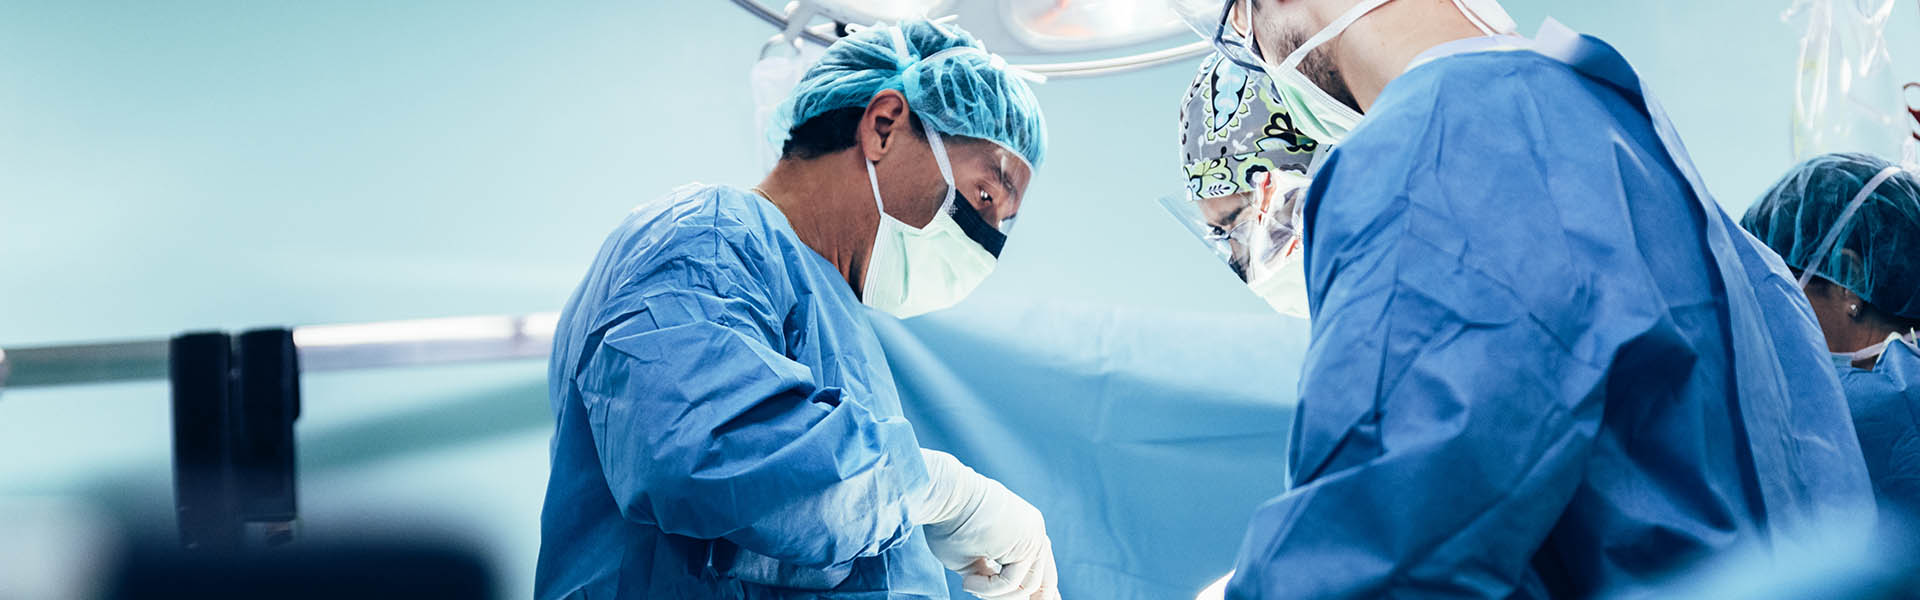 surgeons-blue-coats.jpg